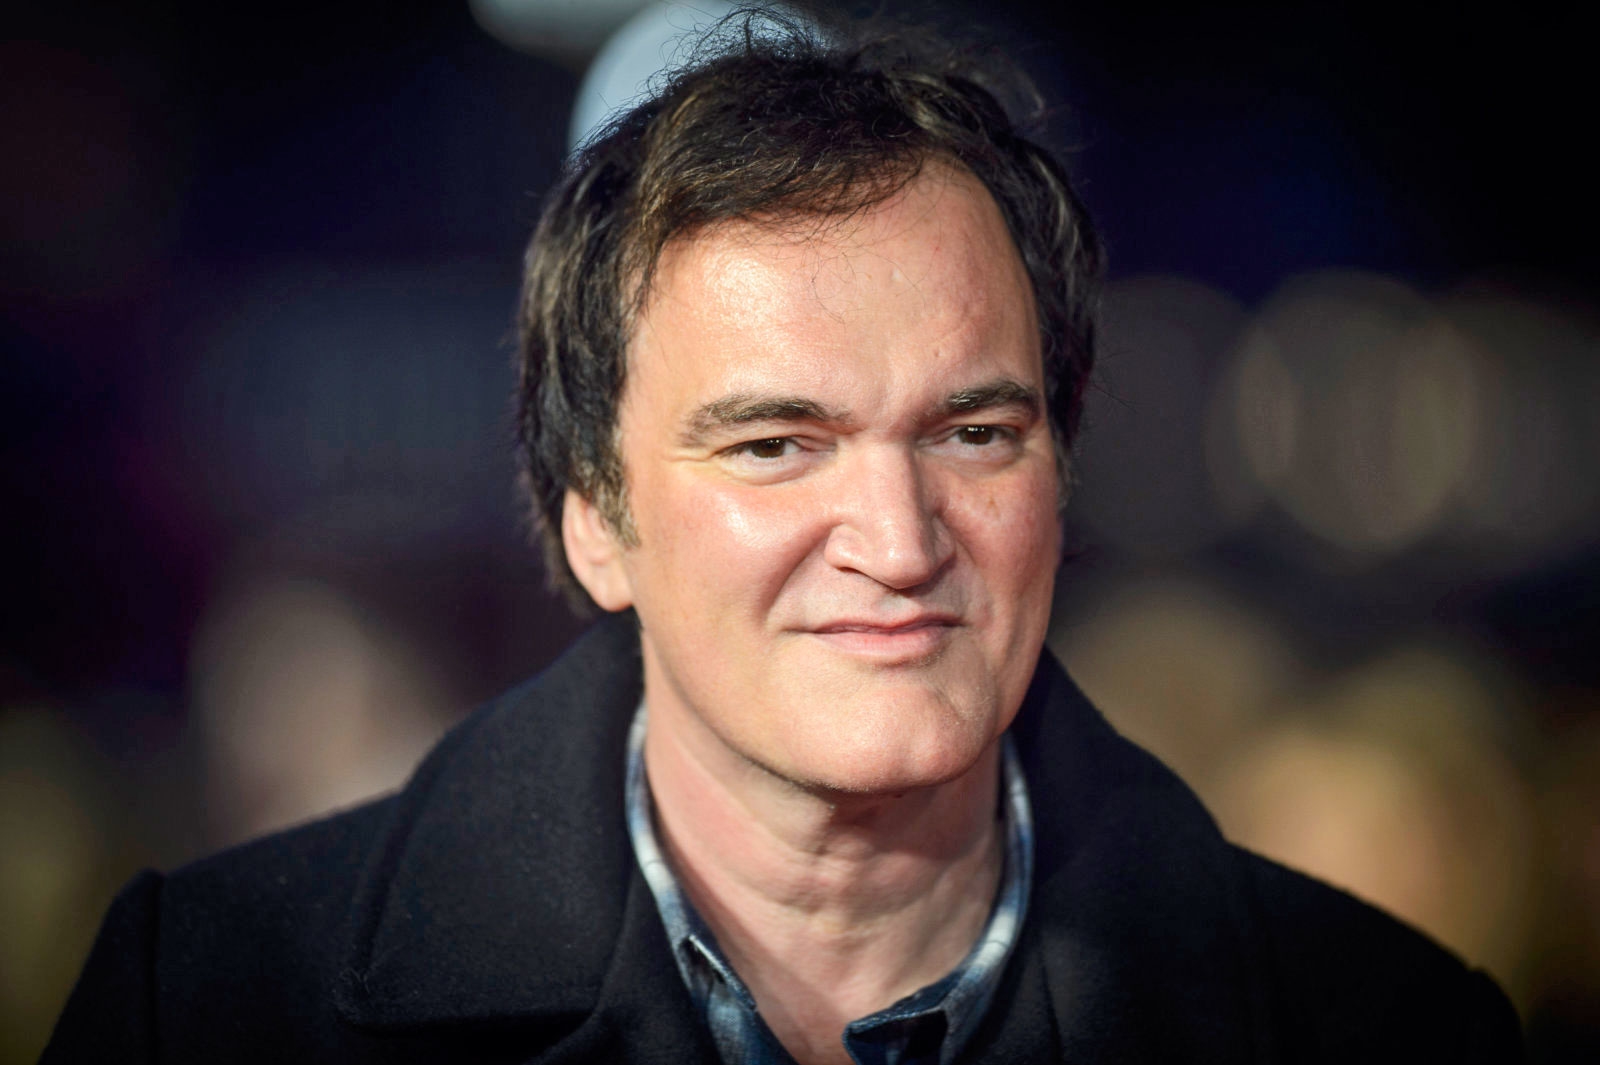 Quentin Tarantino developing 'Star Trek' movie with J.J. Abrams | DeviceDaily.com